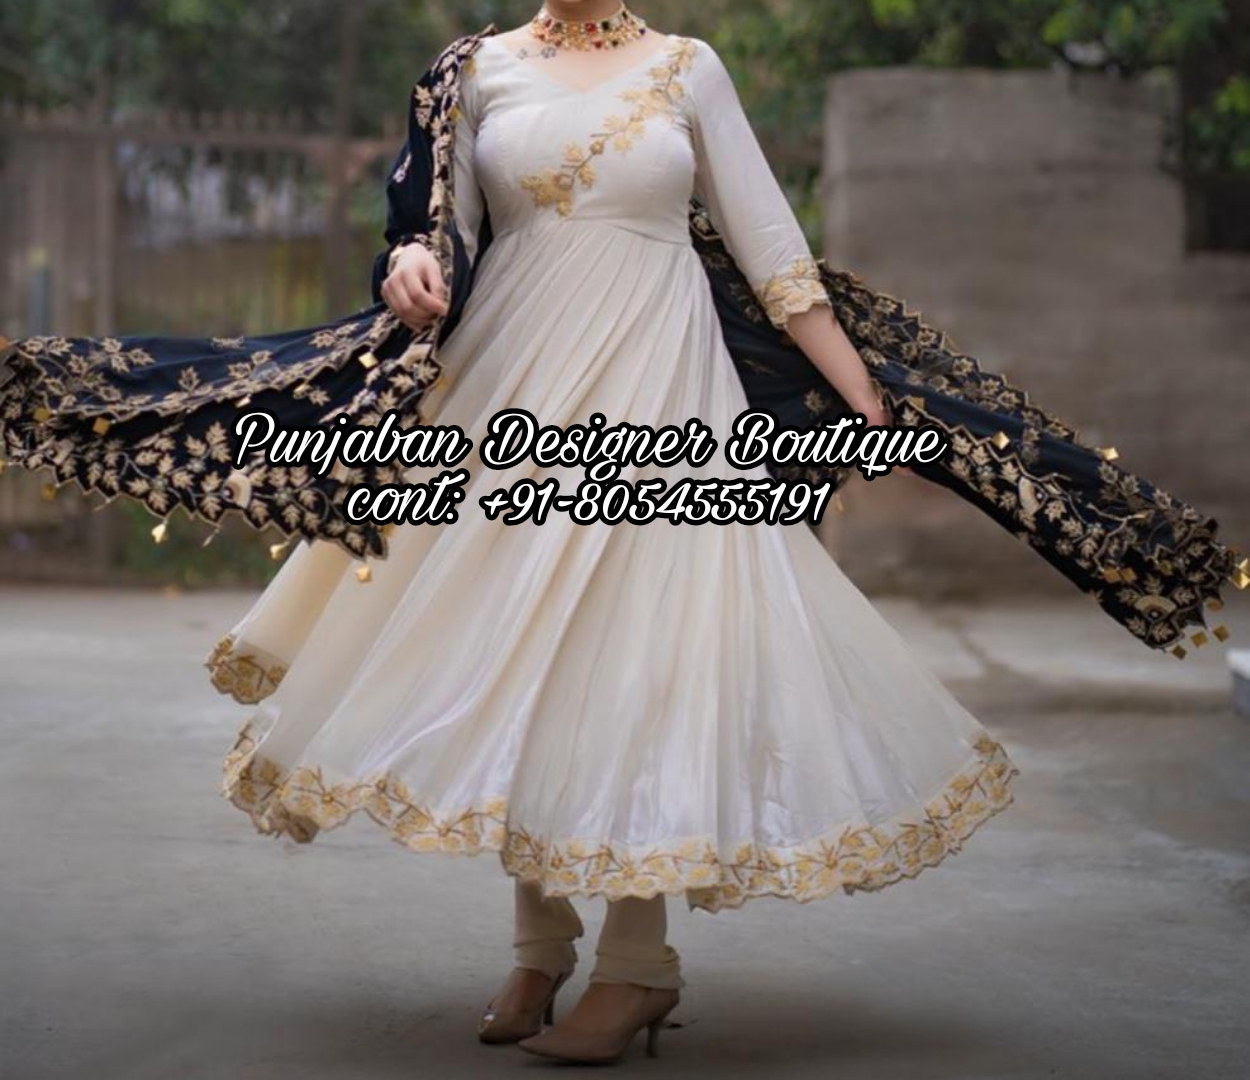 Online Boutique Dress | Punjaban Designer Boutique